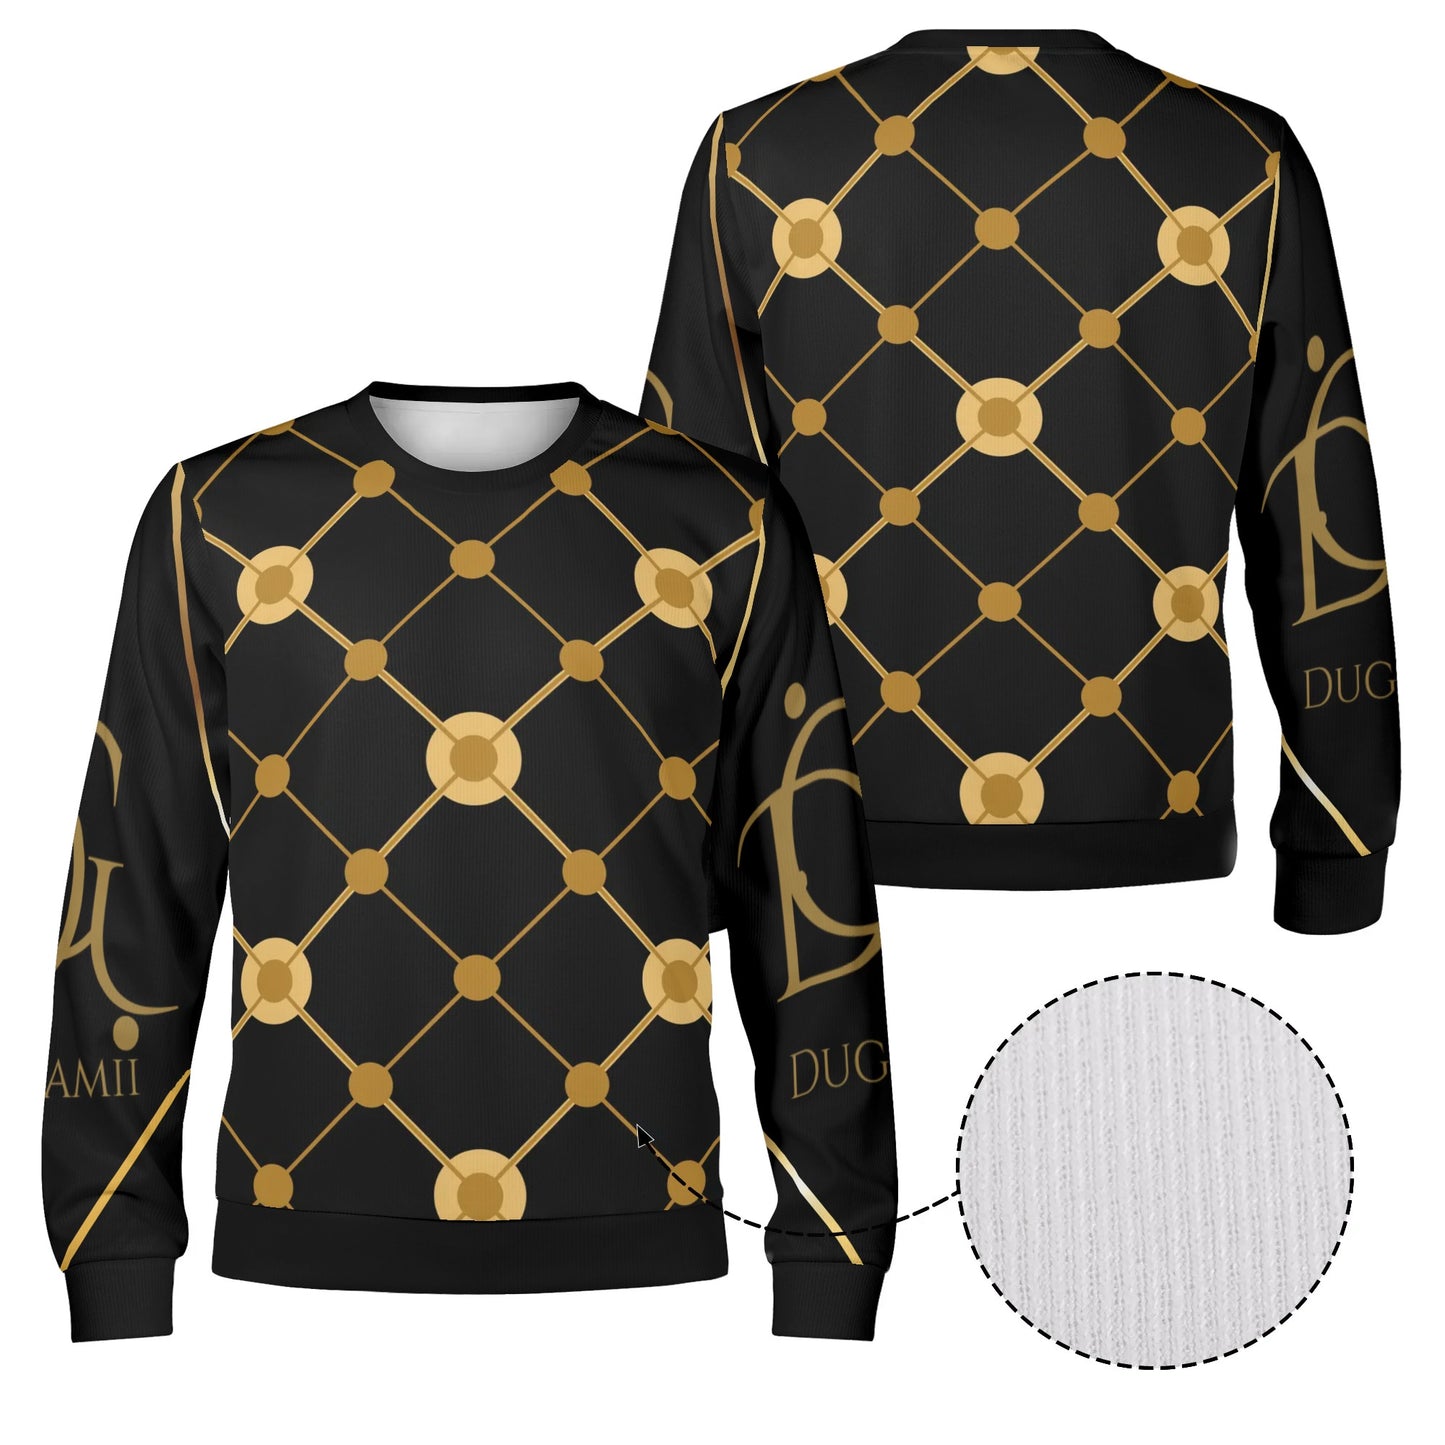 Dugamii Unisex Classic Black and Gold Cotton Pullover Sweatshirt